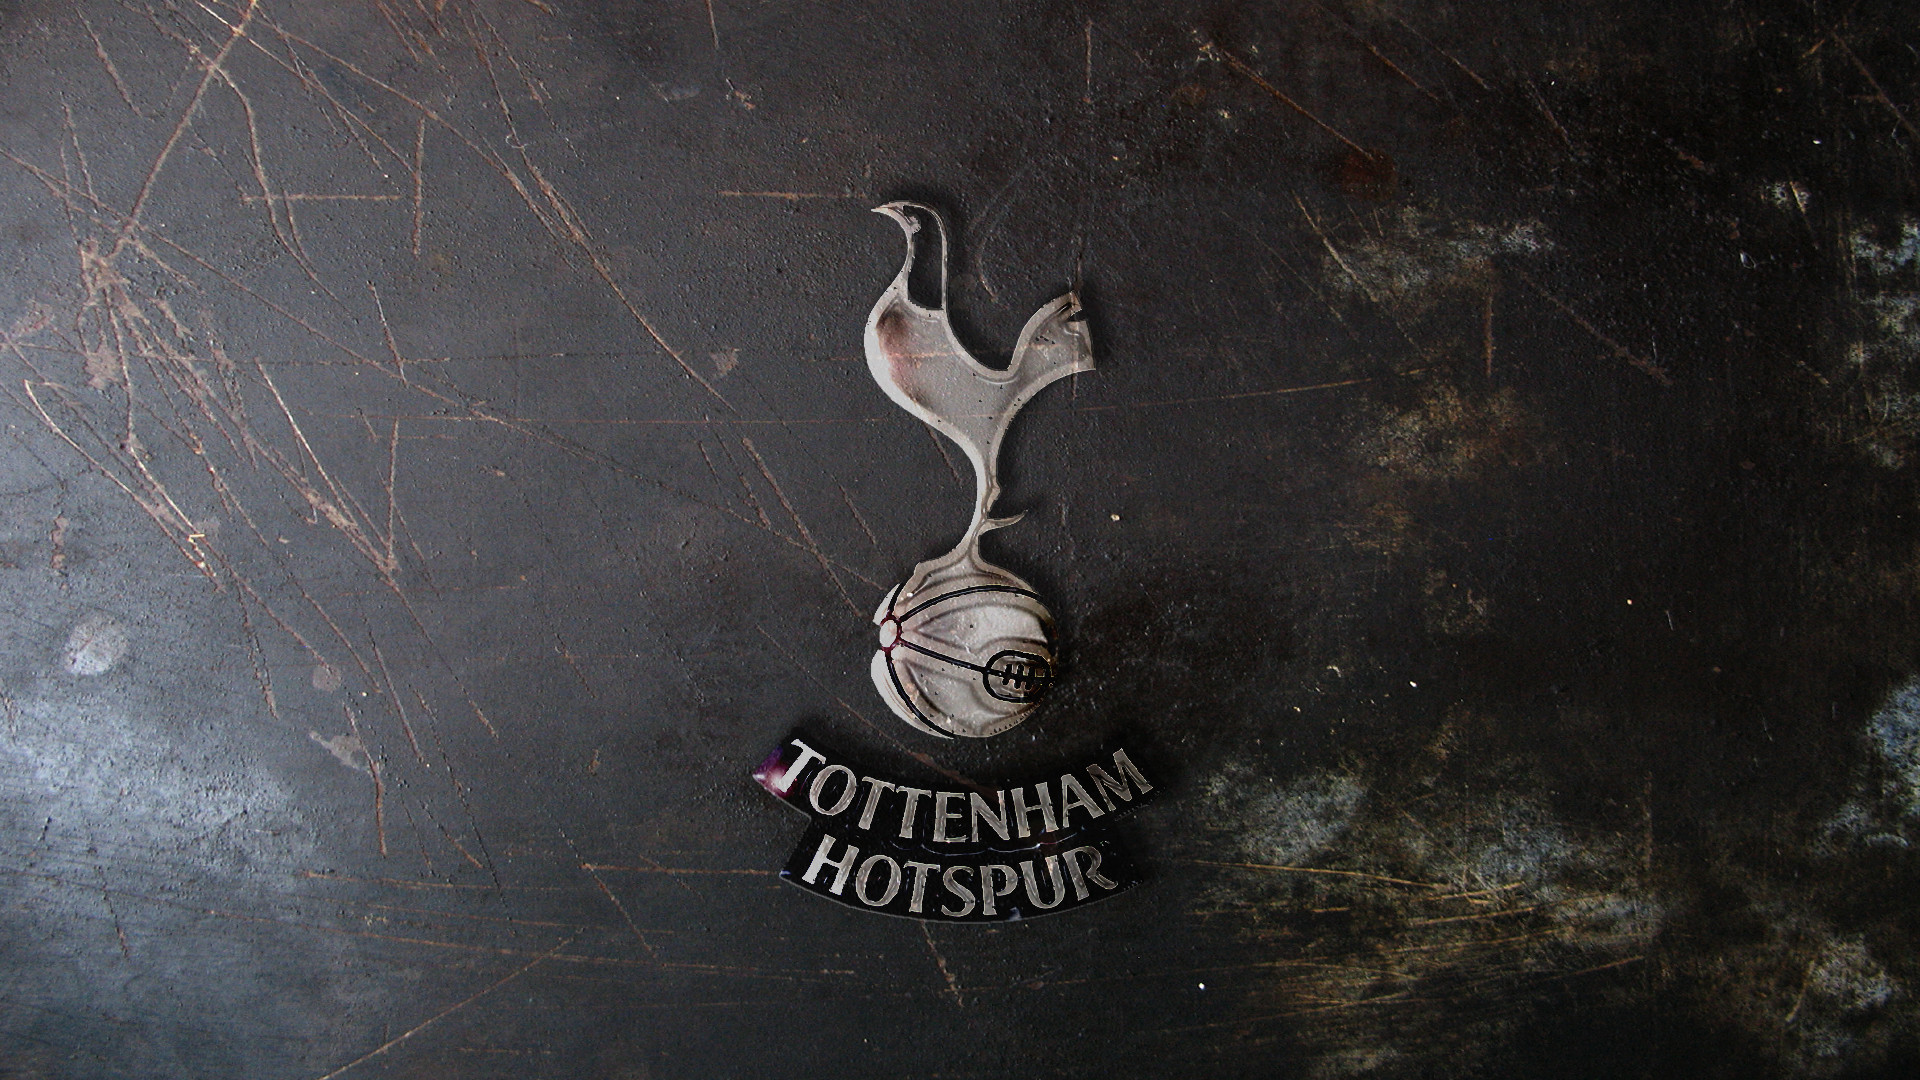 Tottenham Hotspur FC wallpaper by ElnazTajaddod  Download on ZEDGE  8ef7